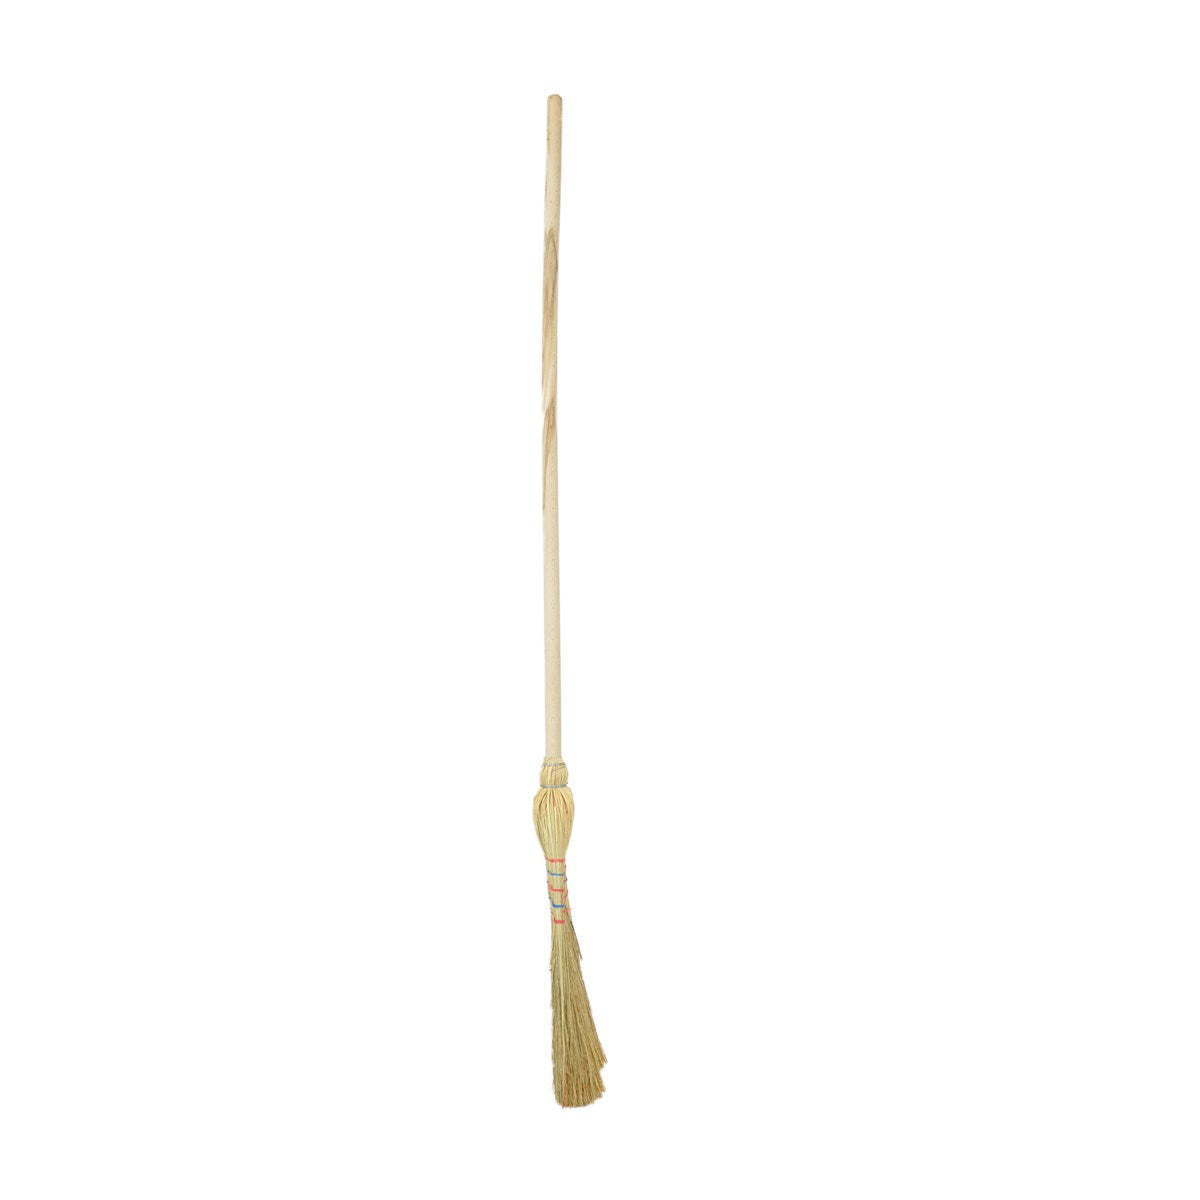 Hillbrush Medium 279mm Corn Broom with Handle